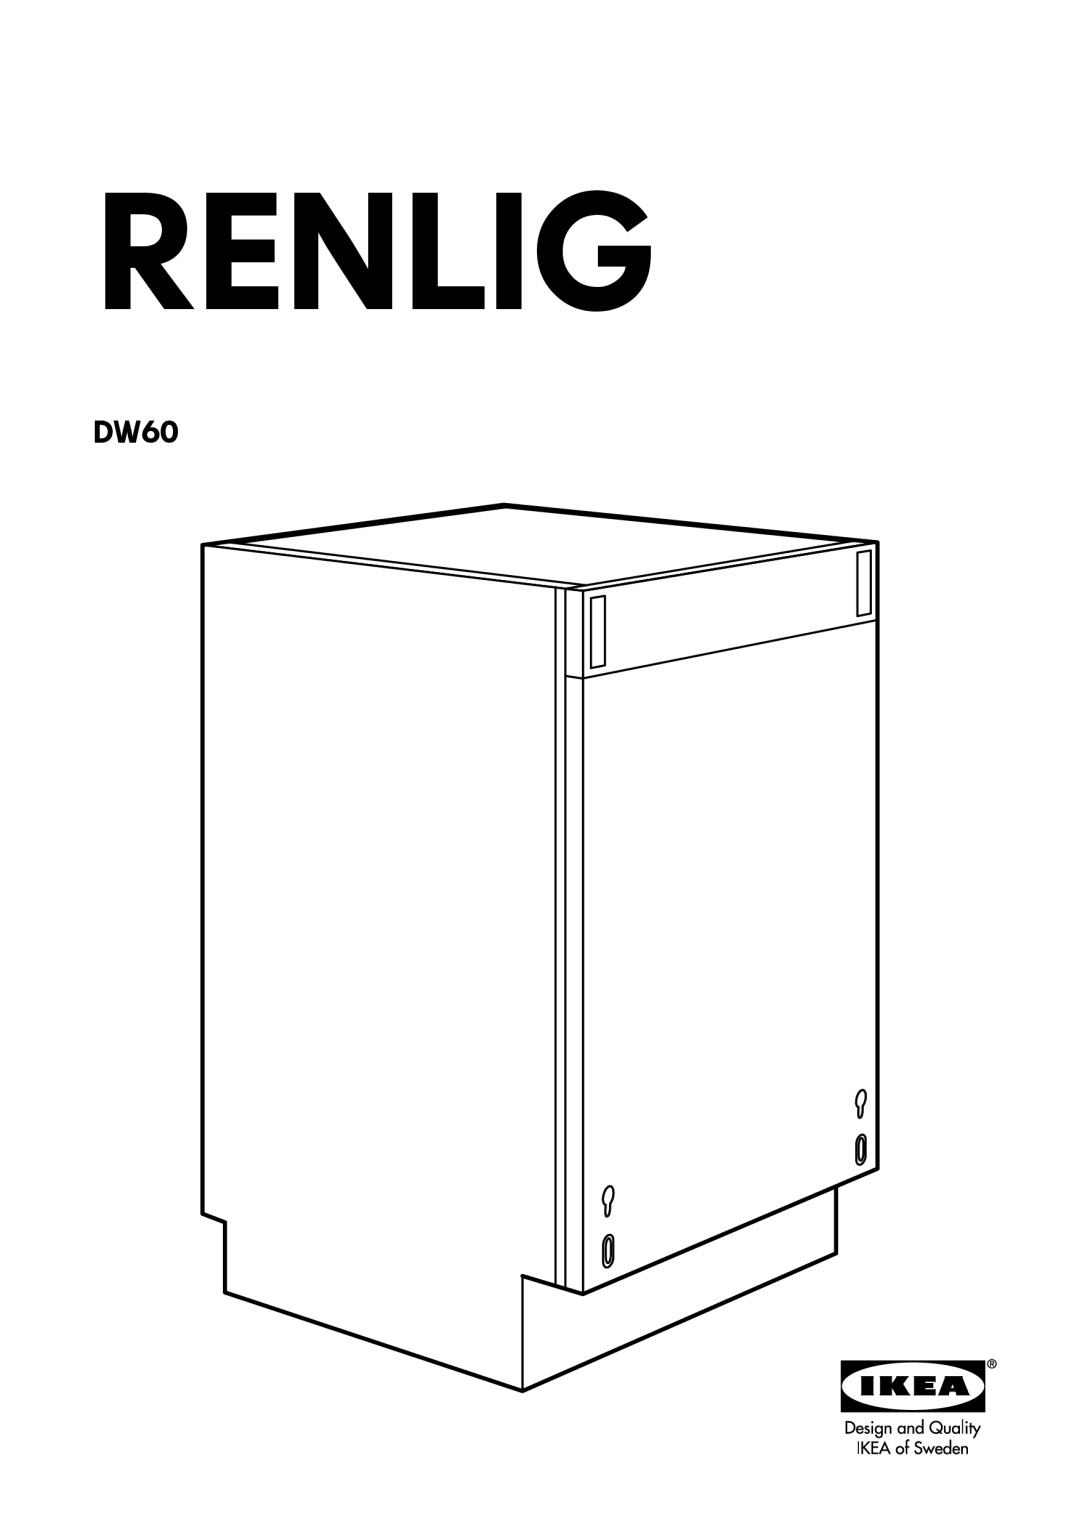 IKEA DW60 manual Renlig Gb 